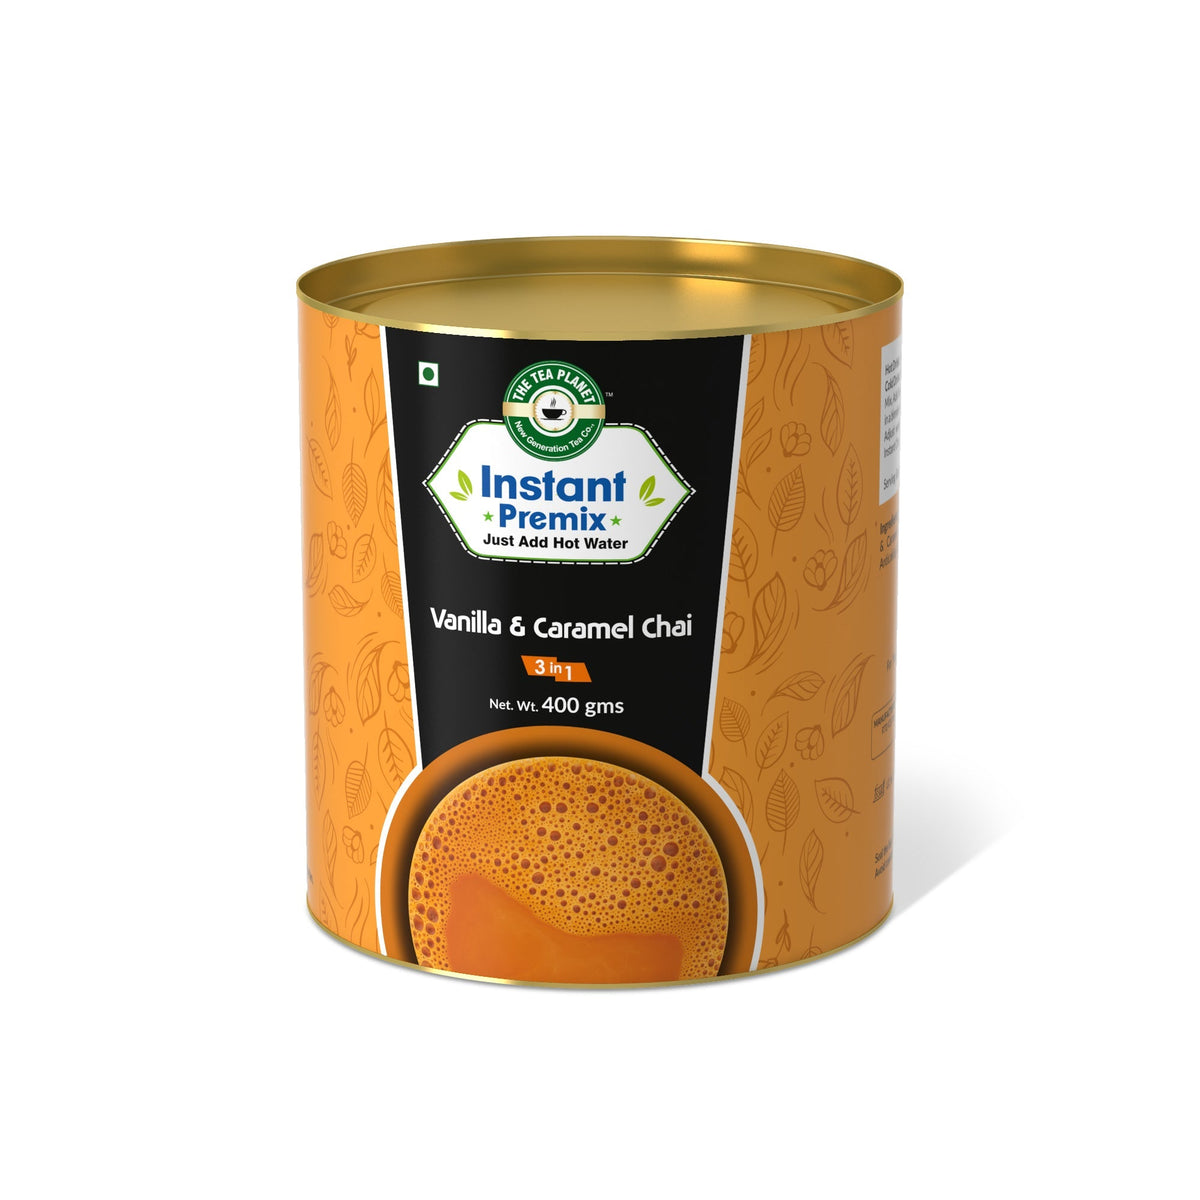 Vanilla & Caramel Chai Premix (3 in 1) - 400 gms